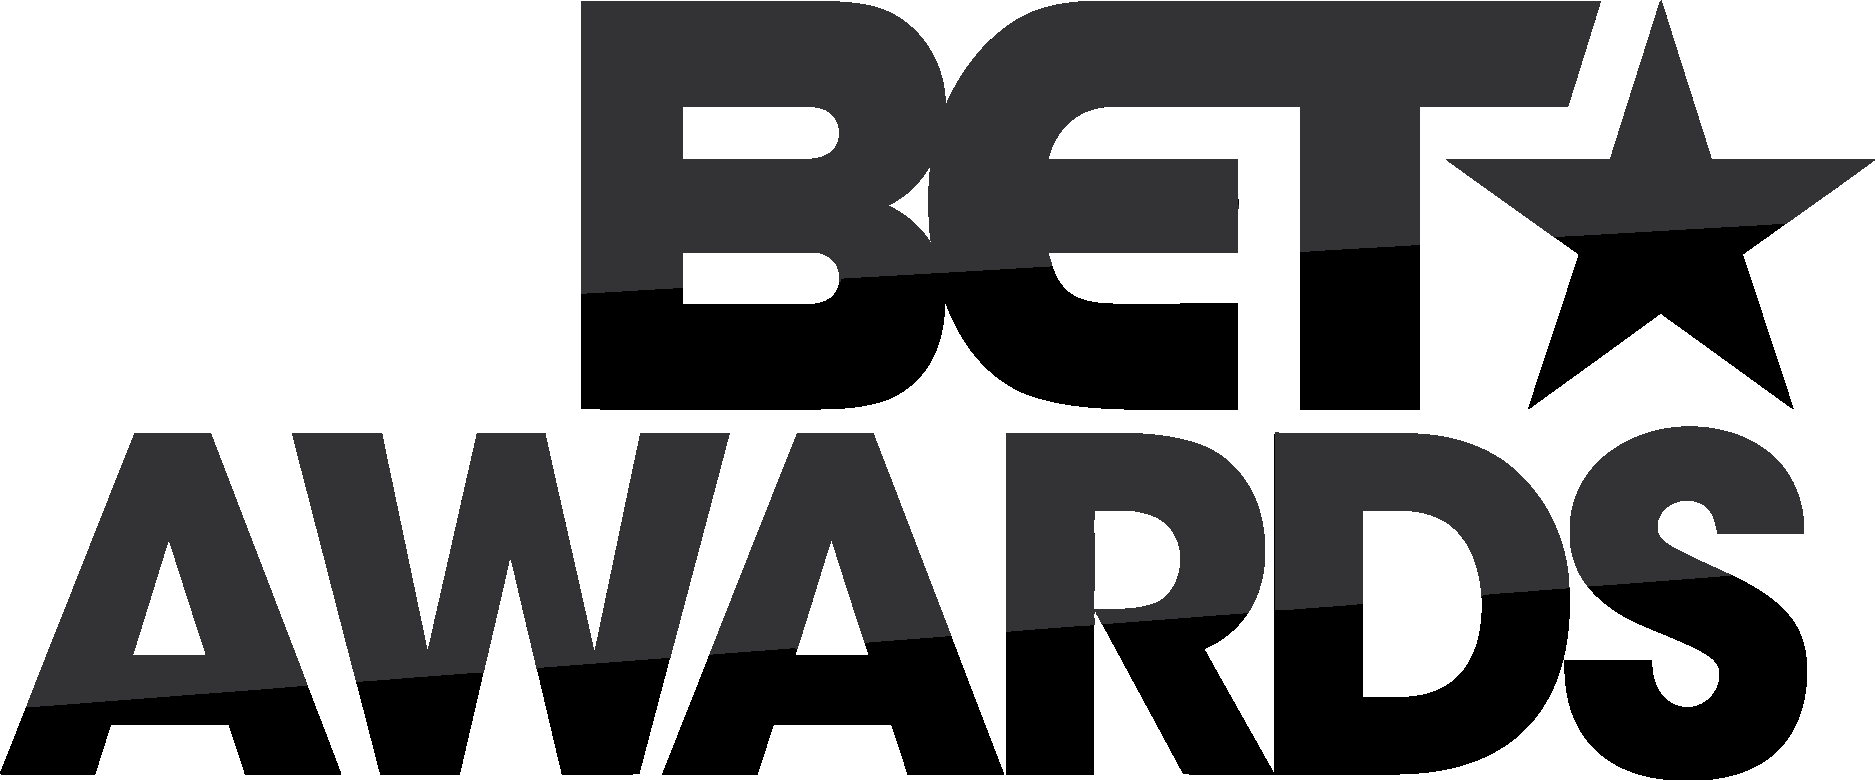 BET Awards Logo Vector (.Ai .PNG .SVG .EPS Free Download)